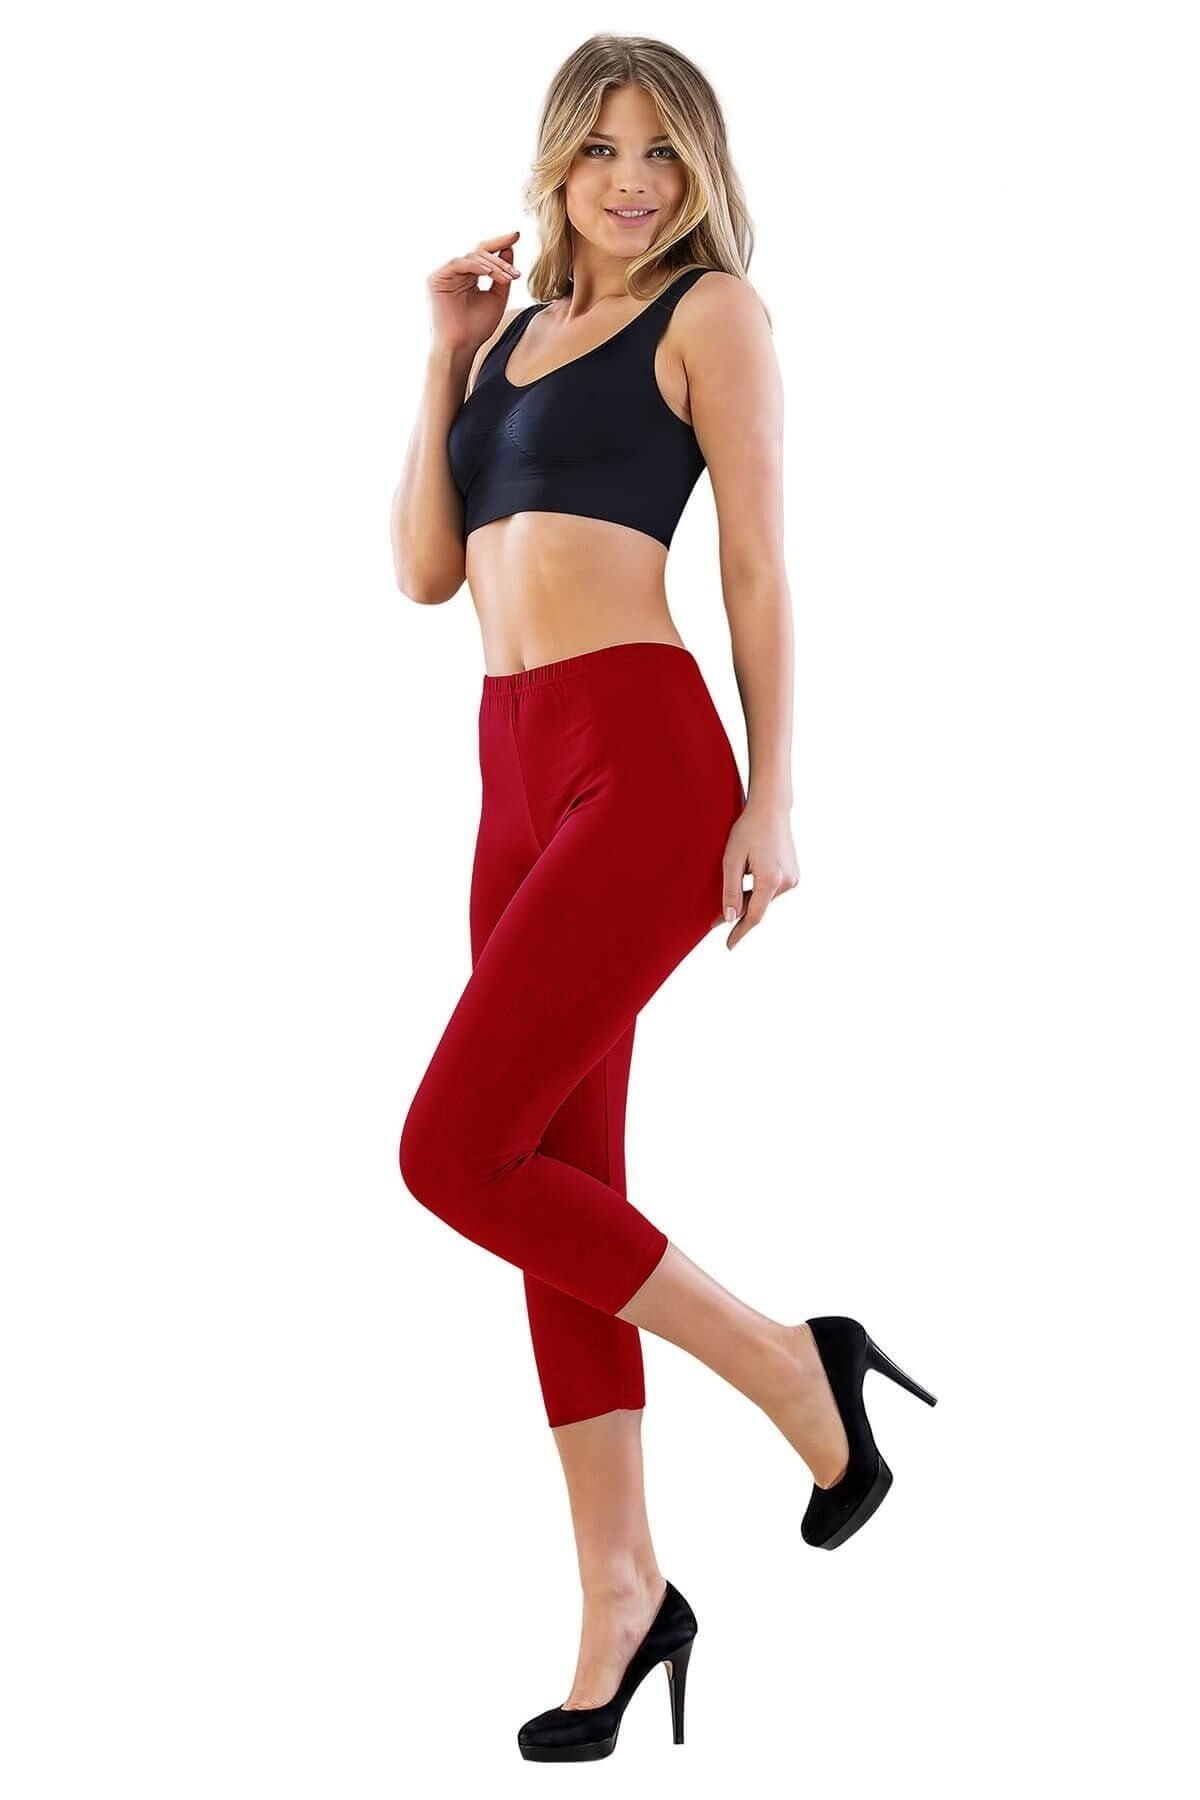 Capri leggings for women • Compare best prices now »